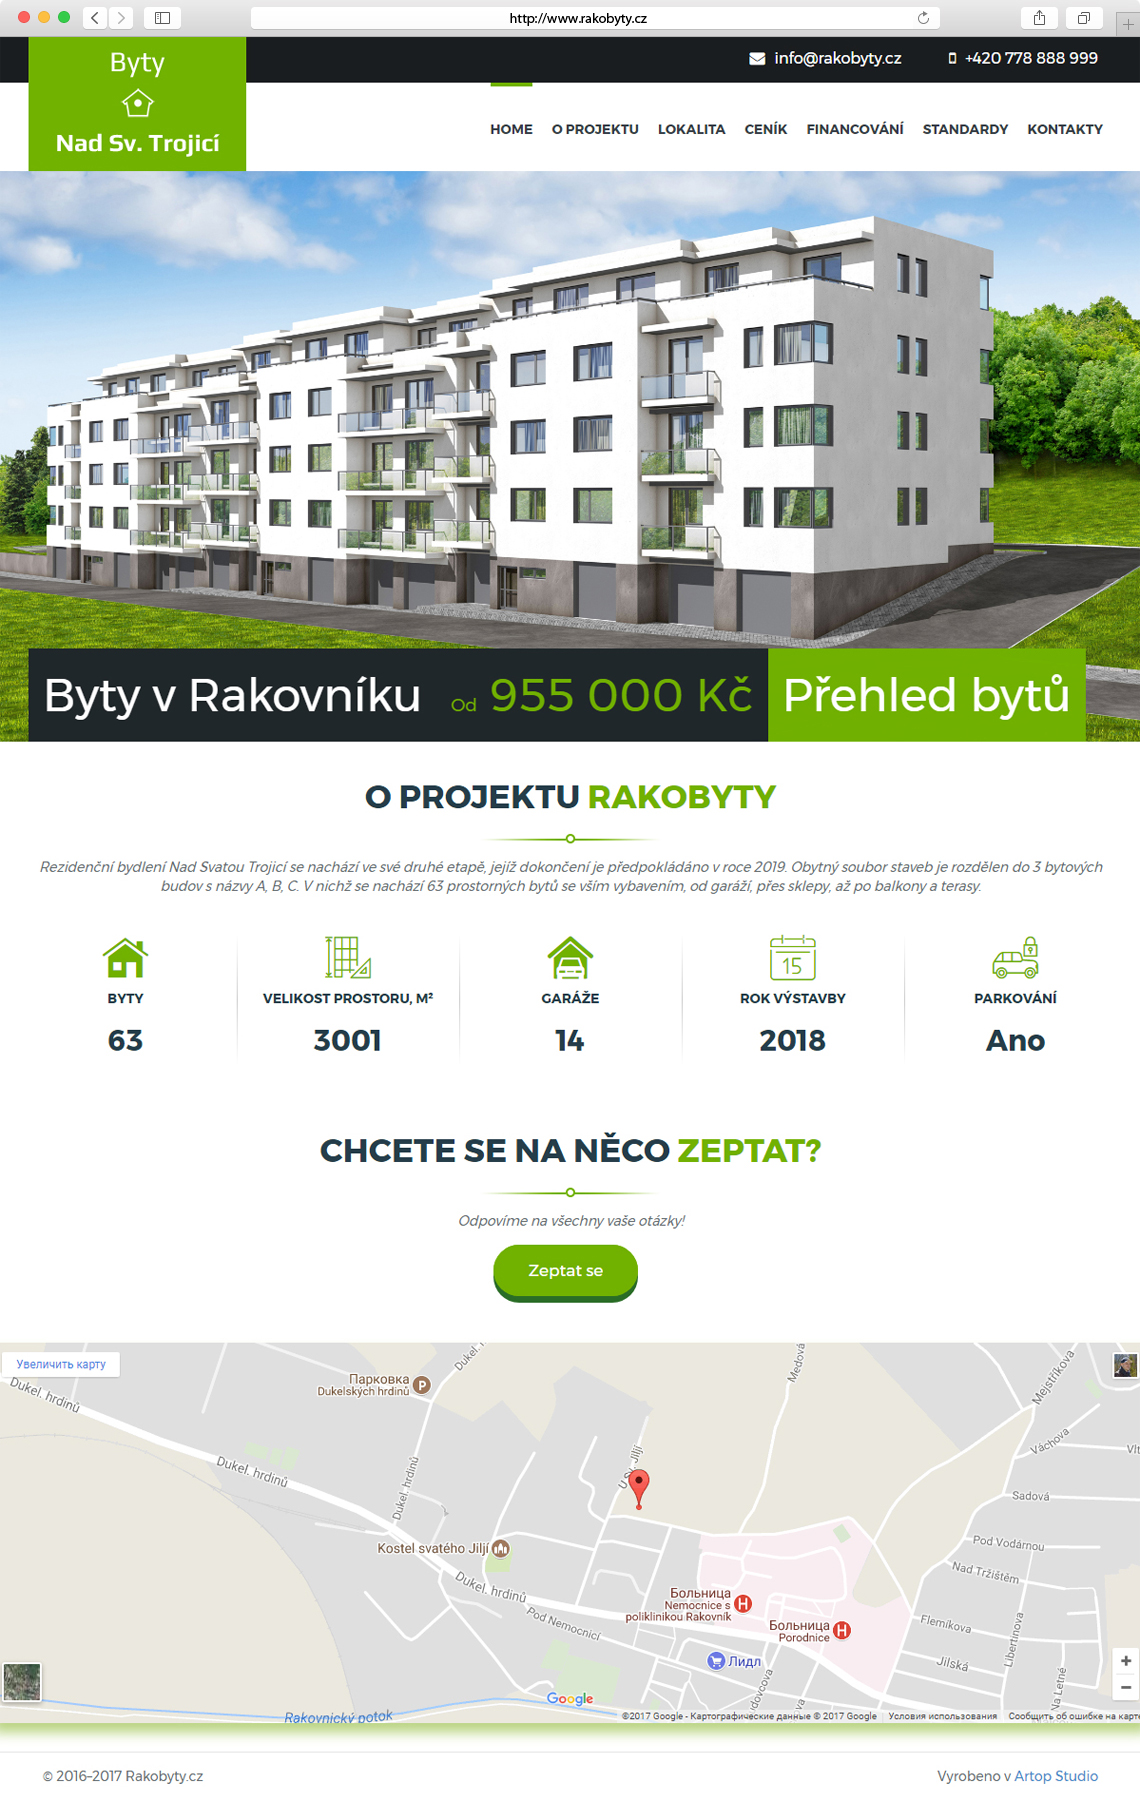 Главная страница www.rakobyty.cz